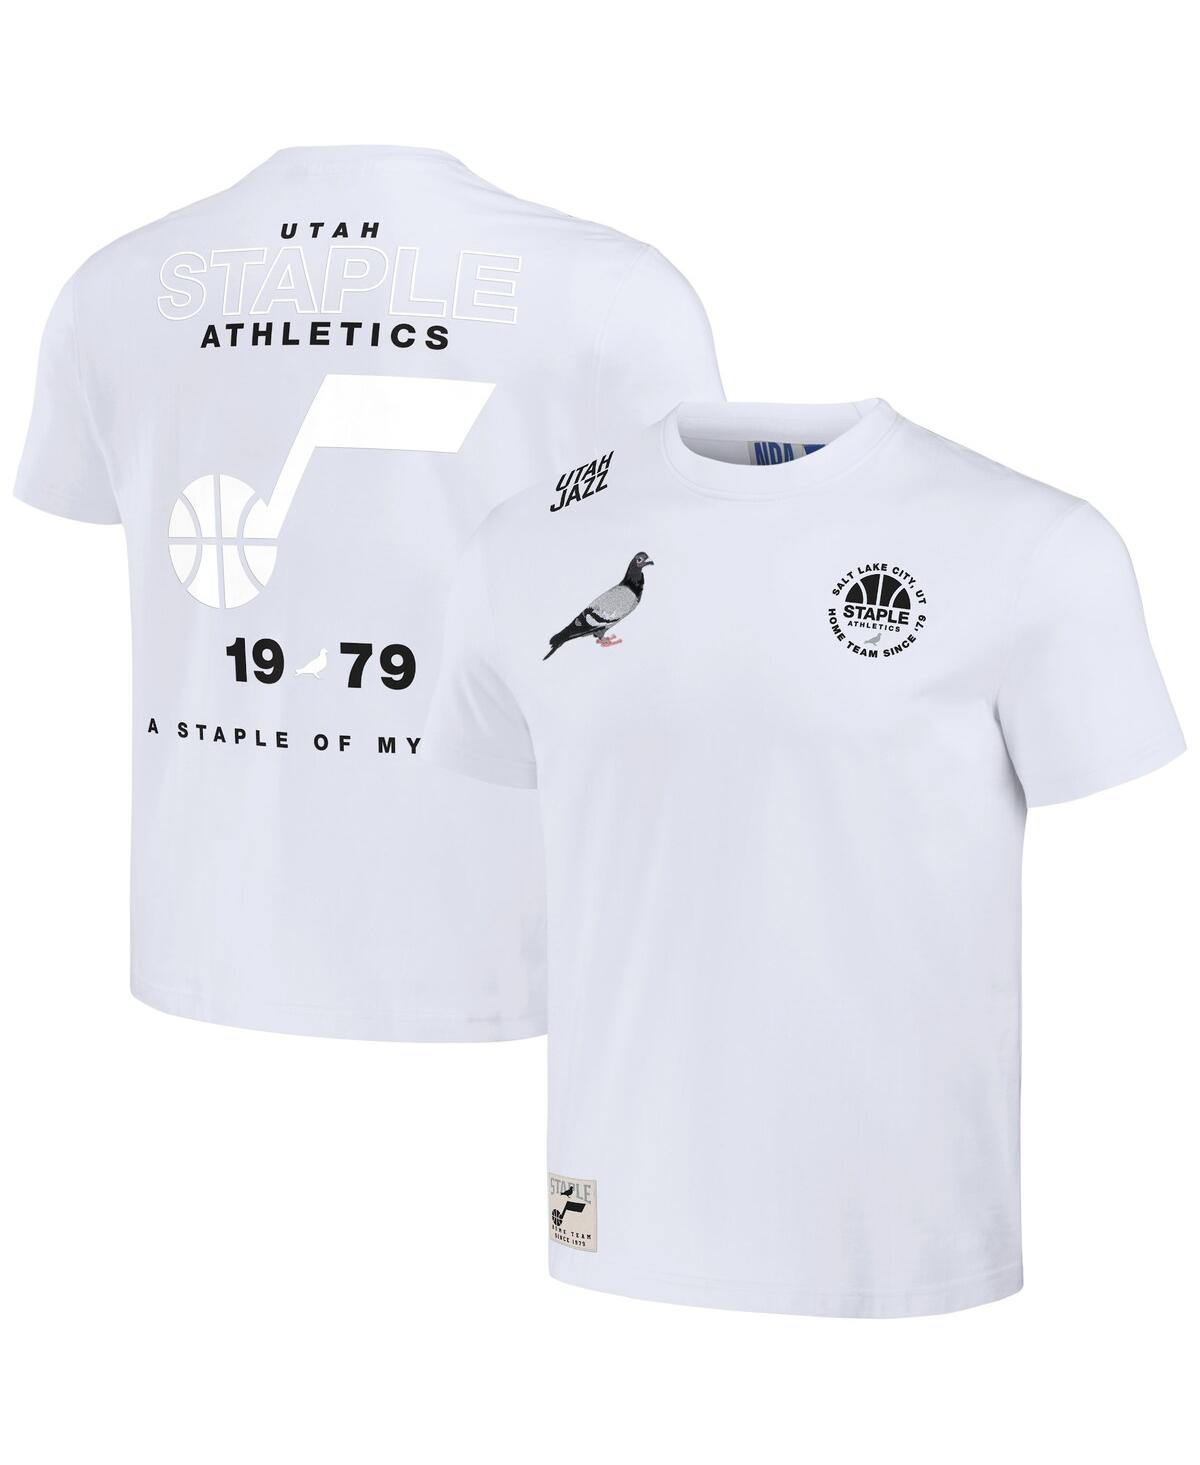 Men's Nba x Staple White Distressed Utah Jazz Home Team T-shirt - White